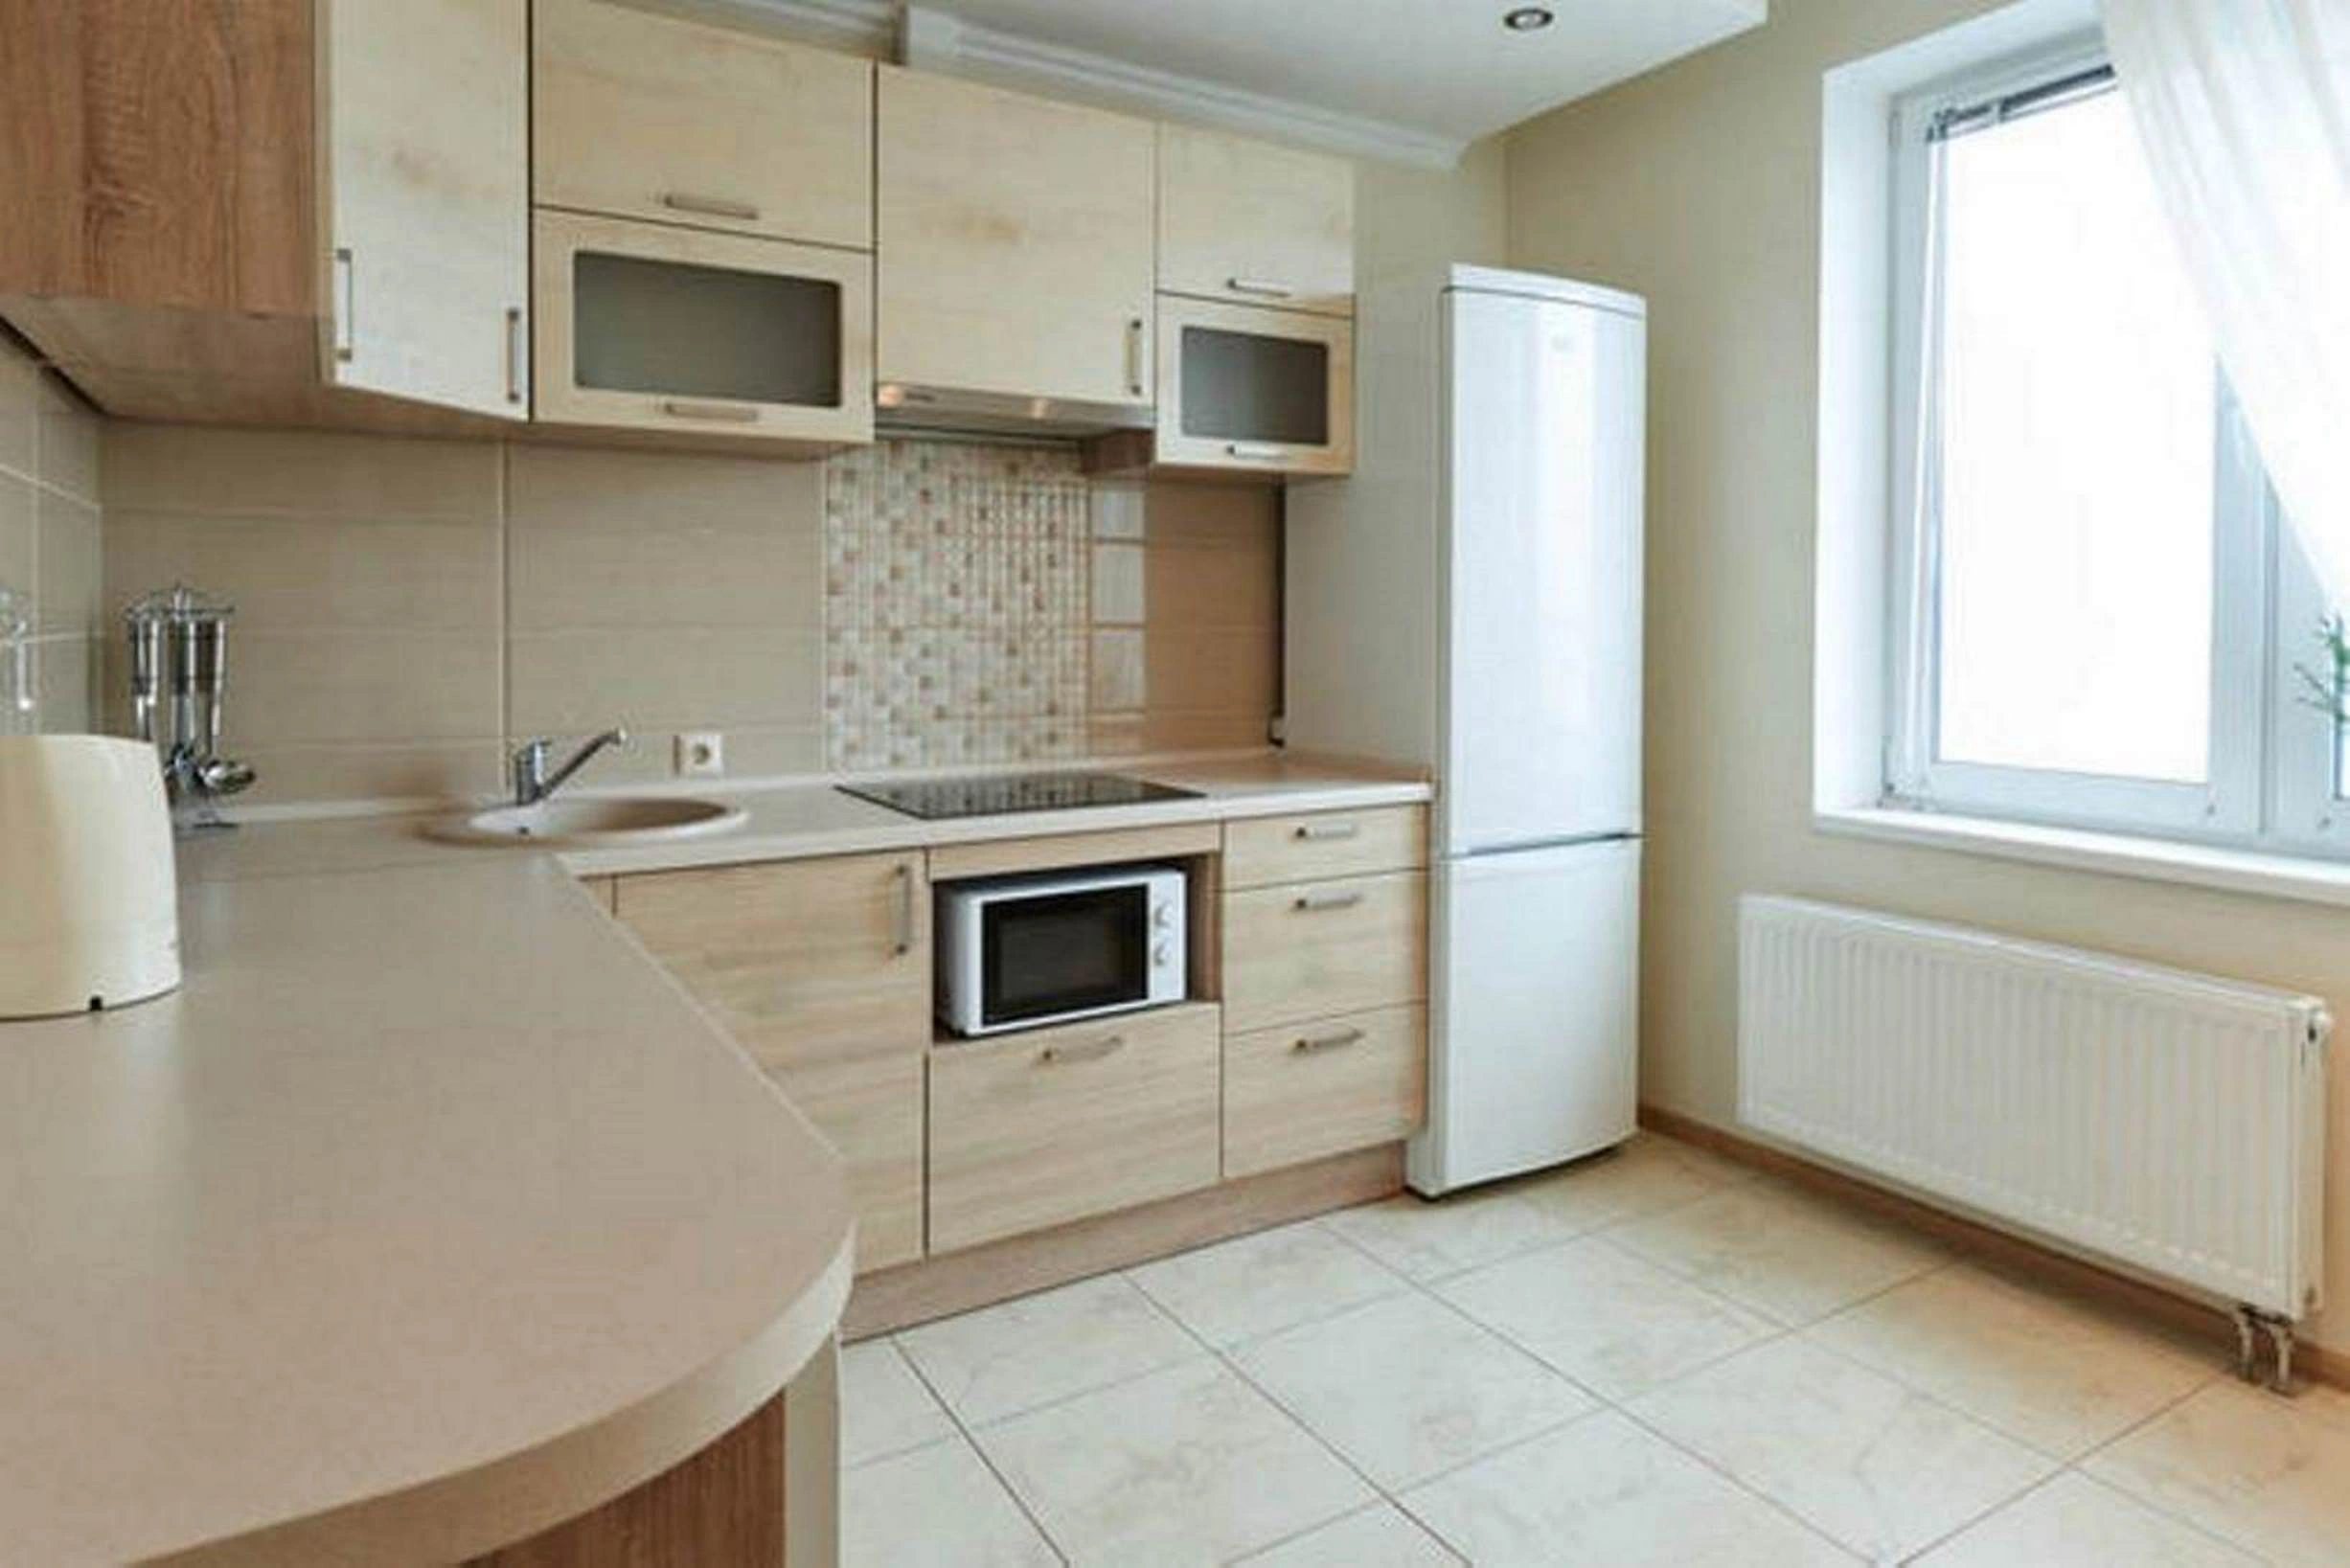 One-room apartment for daily rent Kyiv, Lukyanovka (near Okhmatdet).